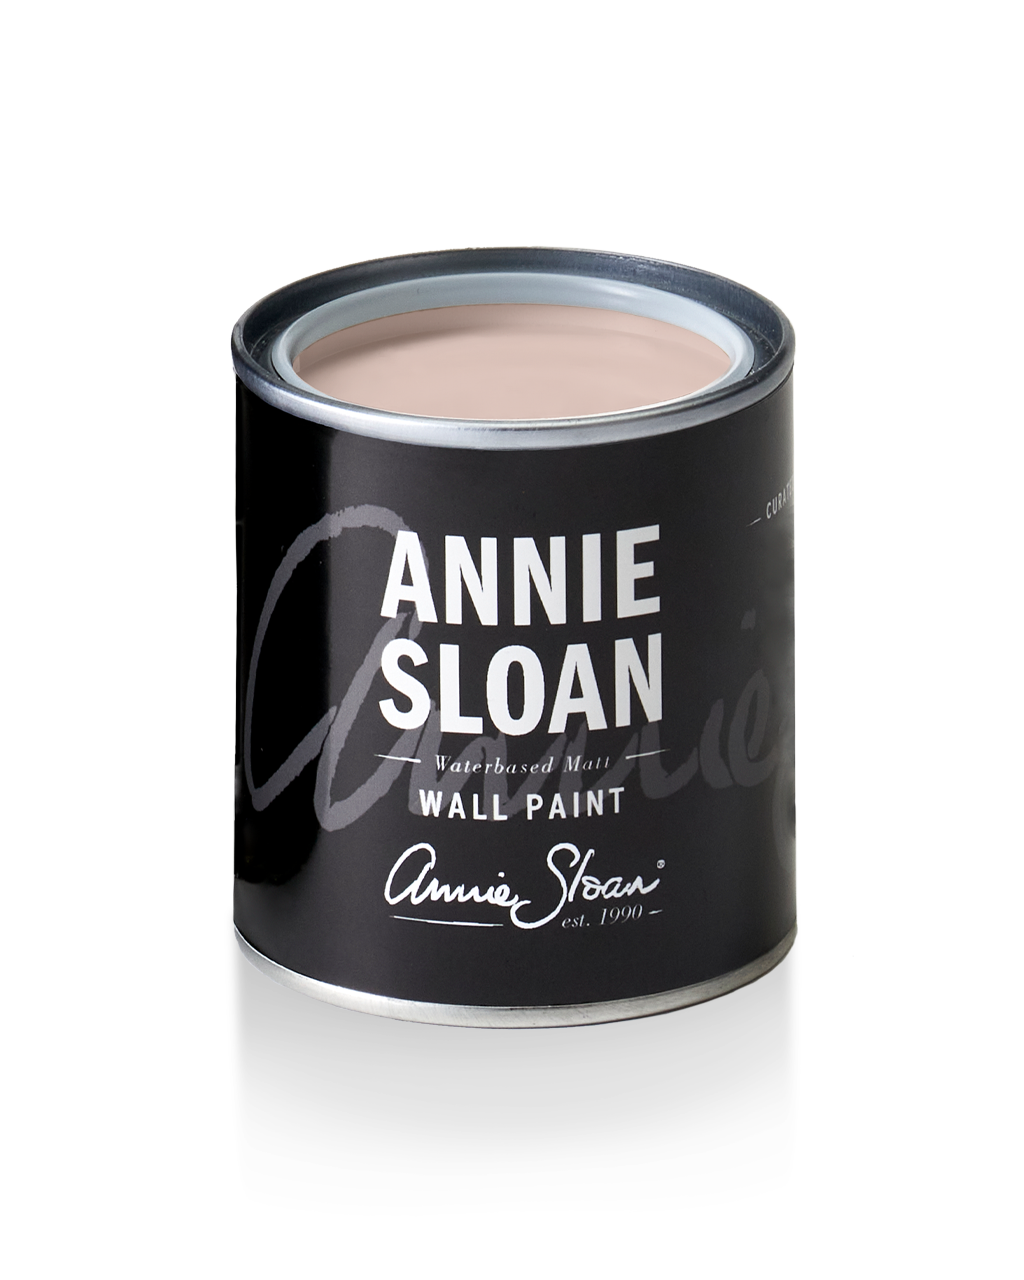 120ml tin of Pointe Silk wall paint by Annie Sloan